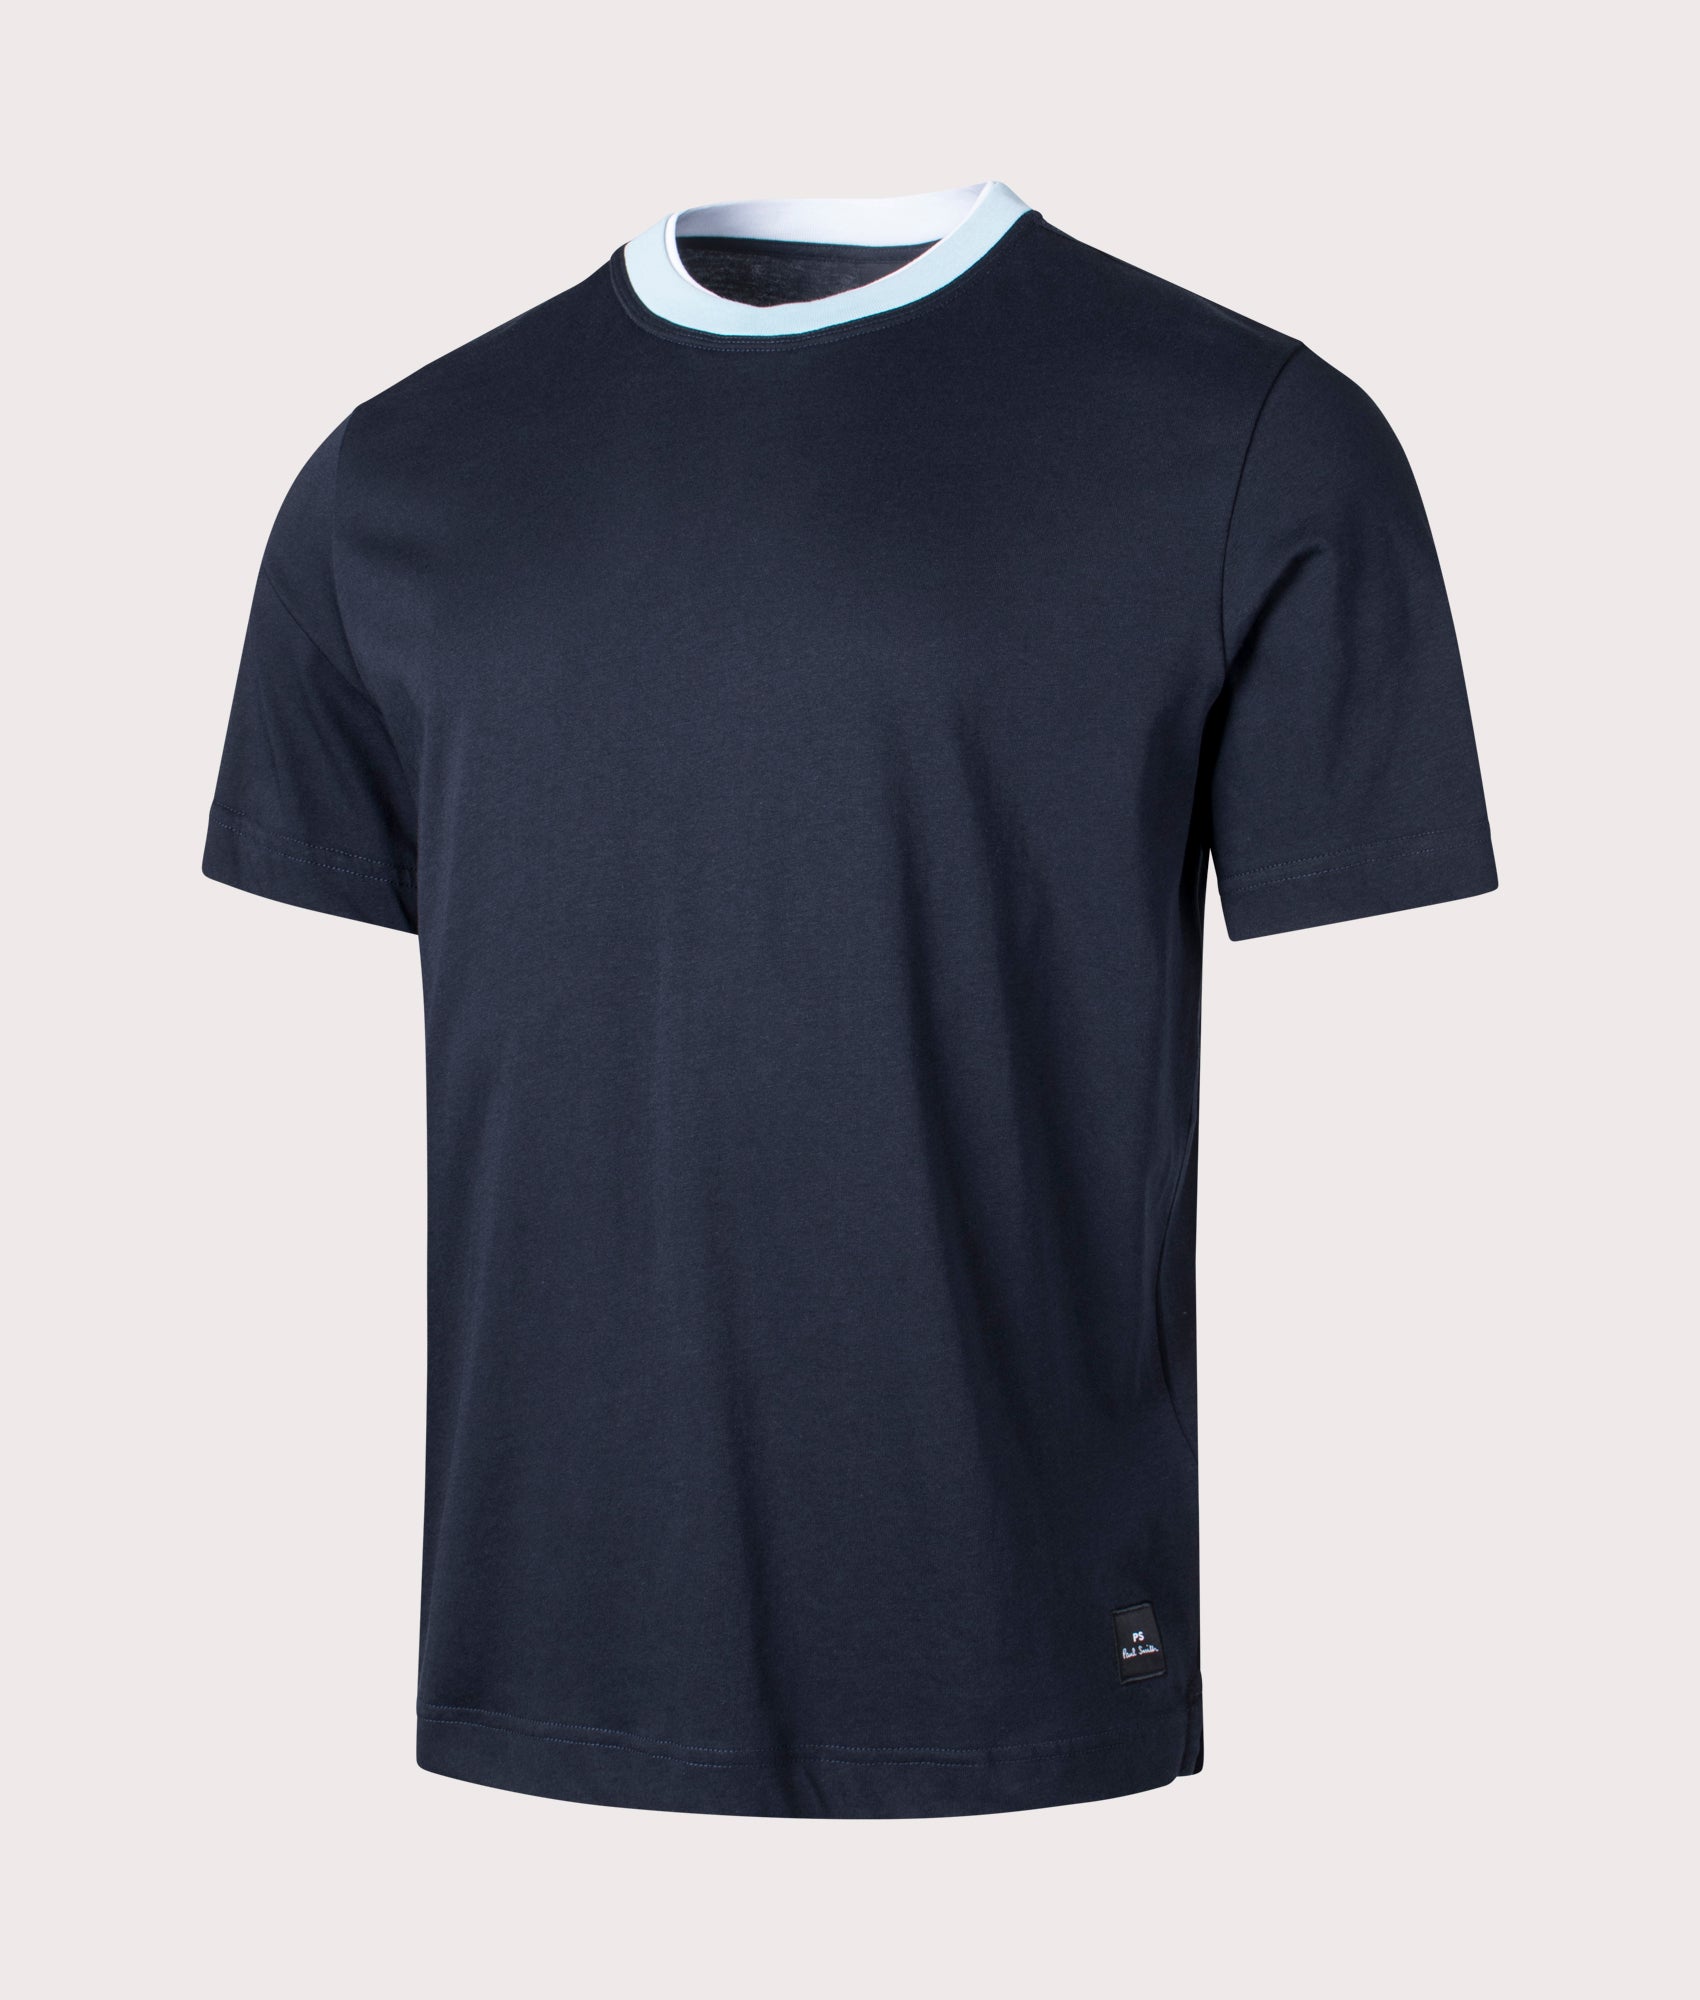 PS Paul Smith Mens Contrast Crew Neck T-Shirt - Colour: 49 Very Dark Navy - Size: Medium